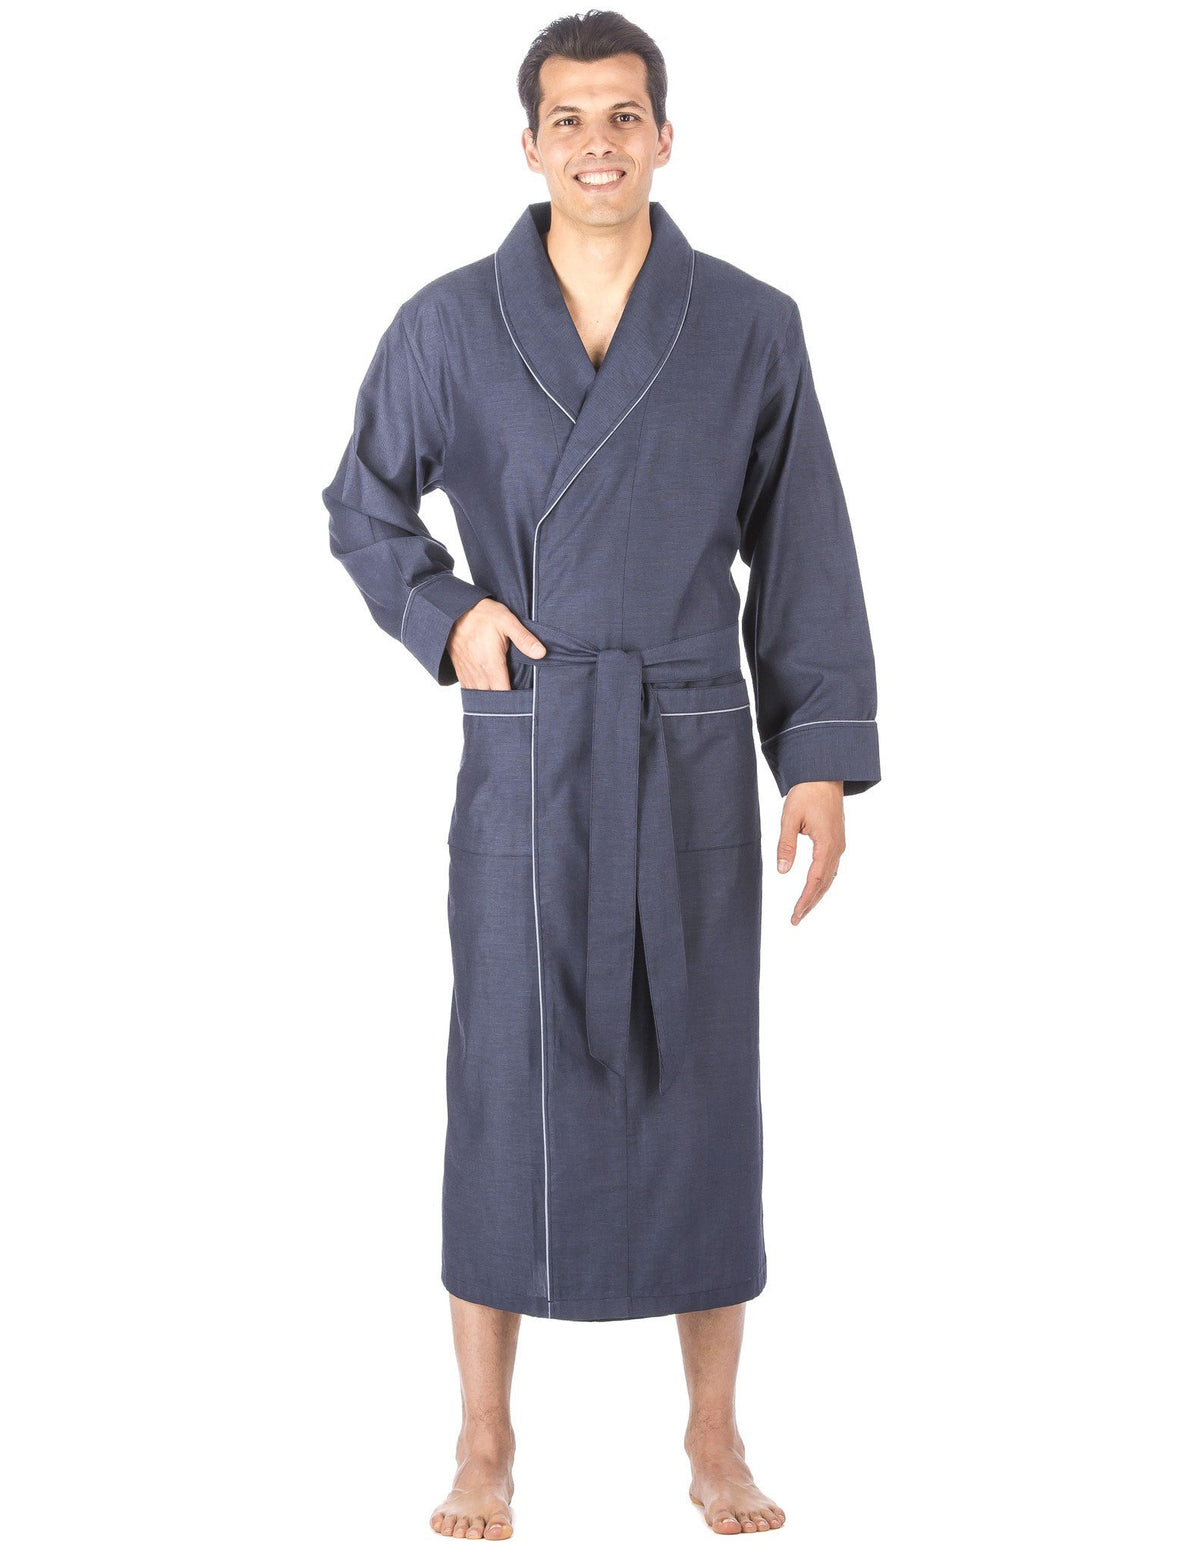 Men's Premium 100% Cotton Full-Length Robe - Textured Navy